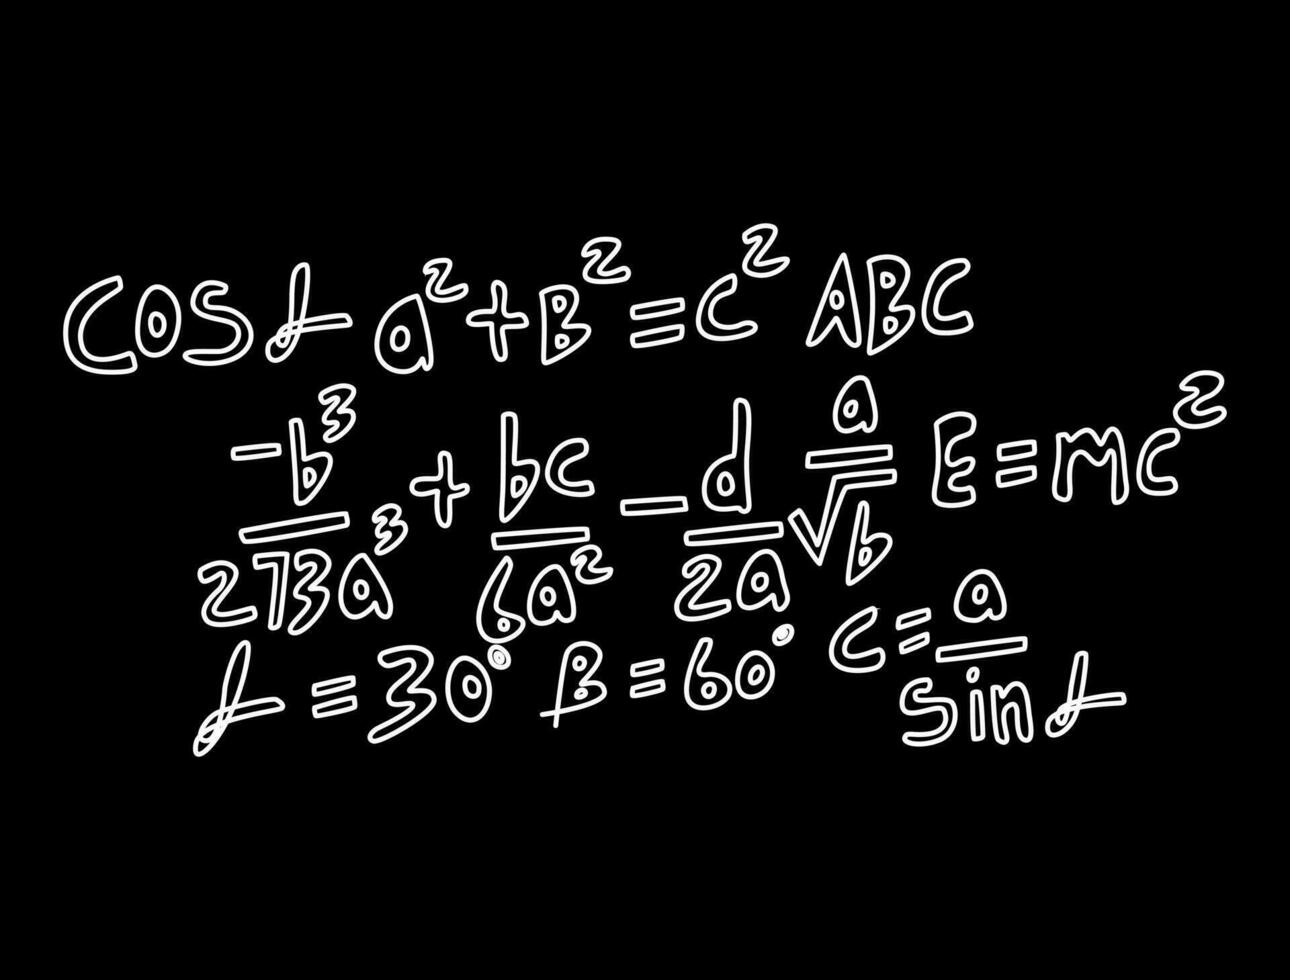 realistische mathetafel-hintergrundillustration vektor